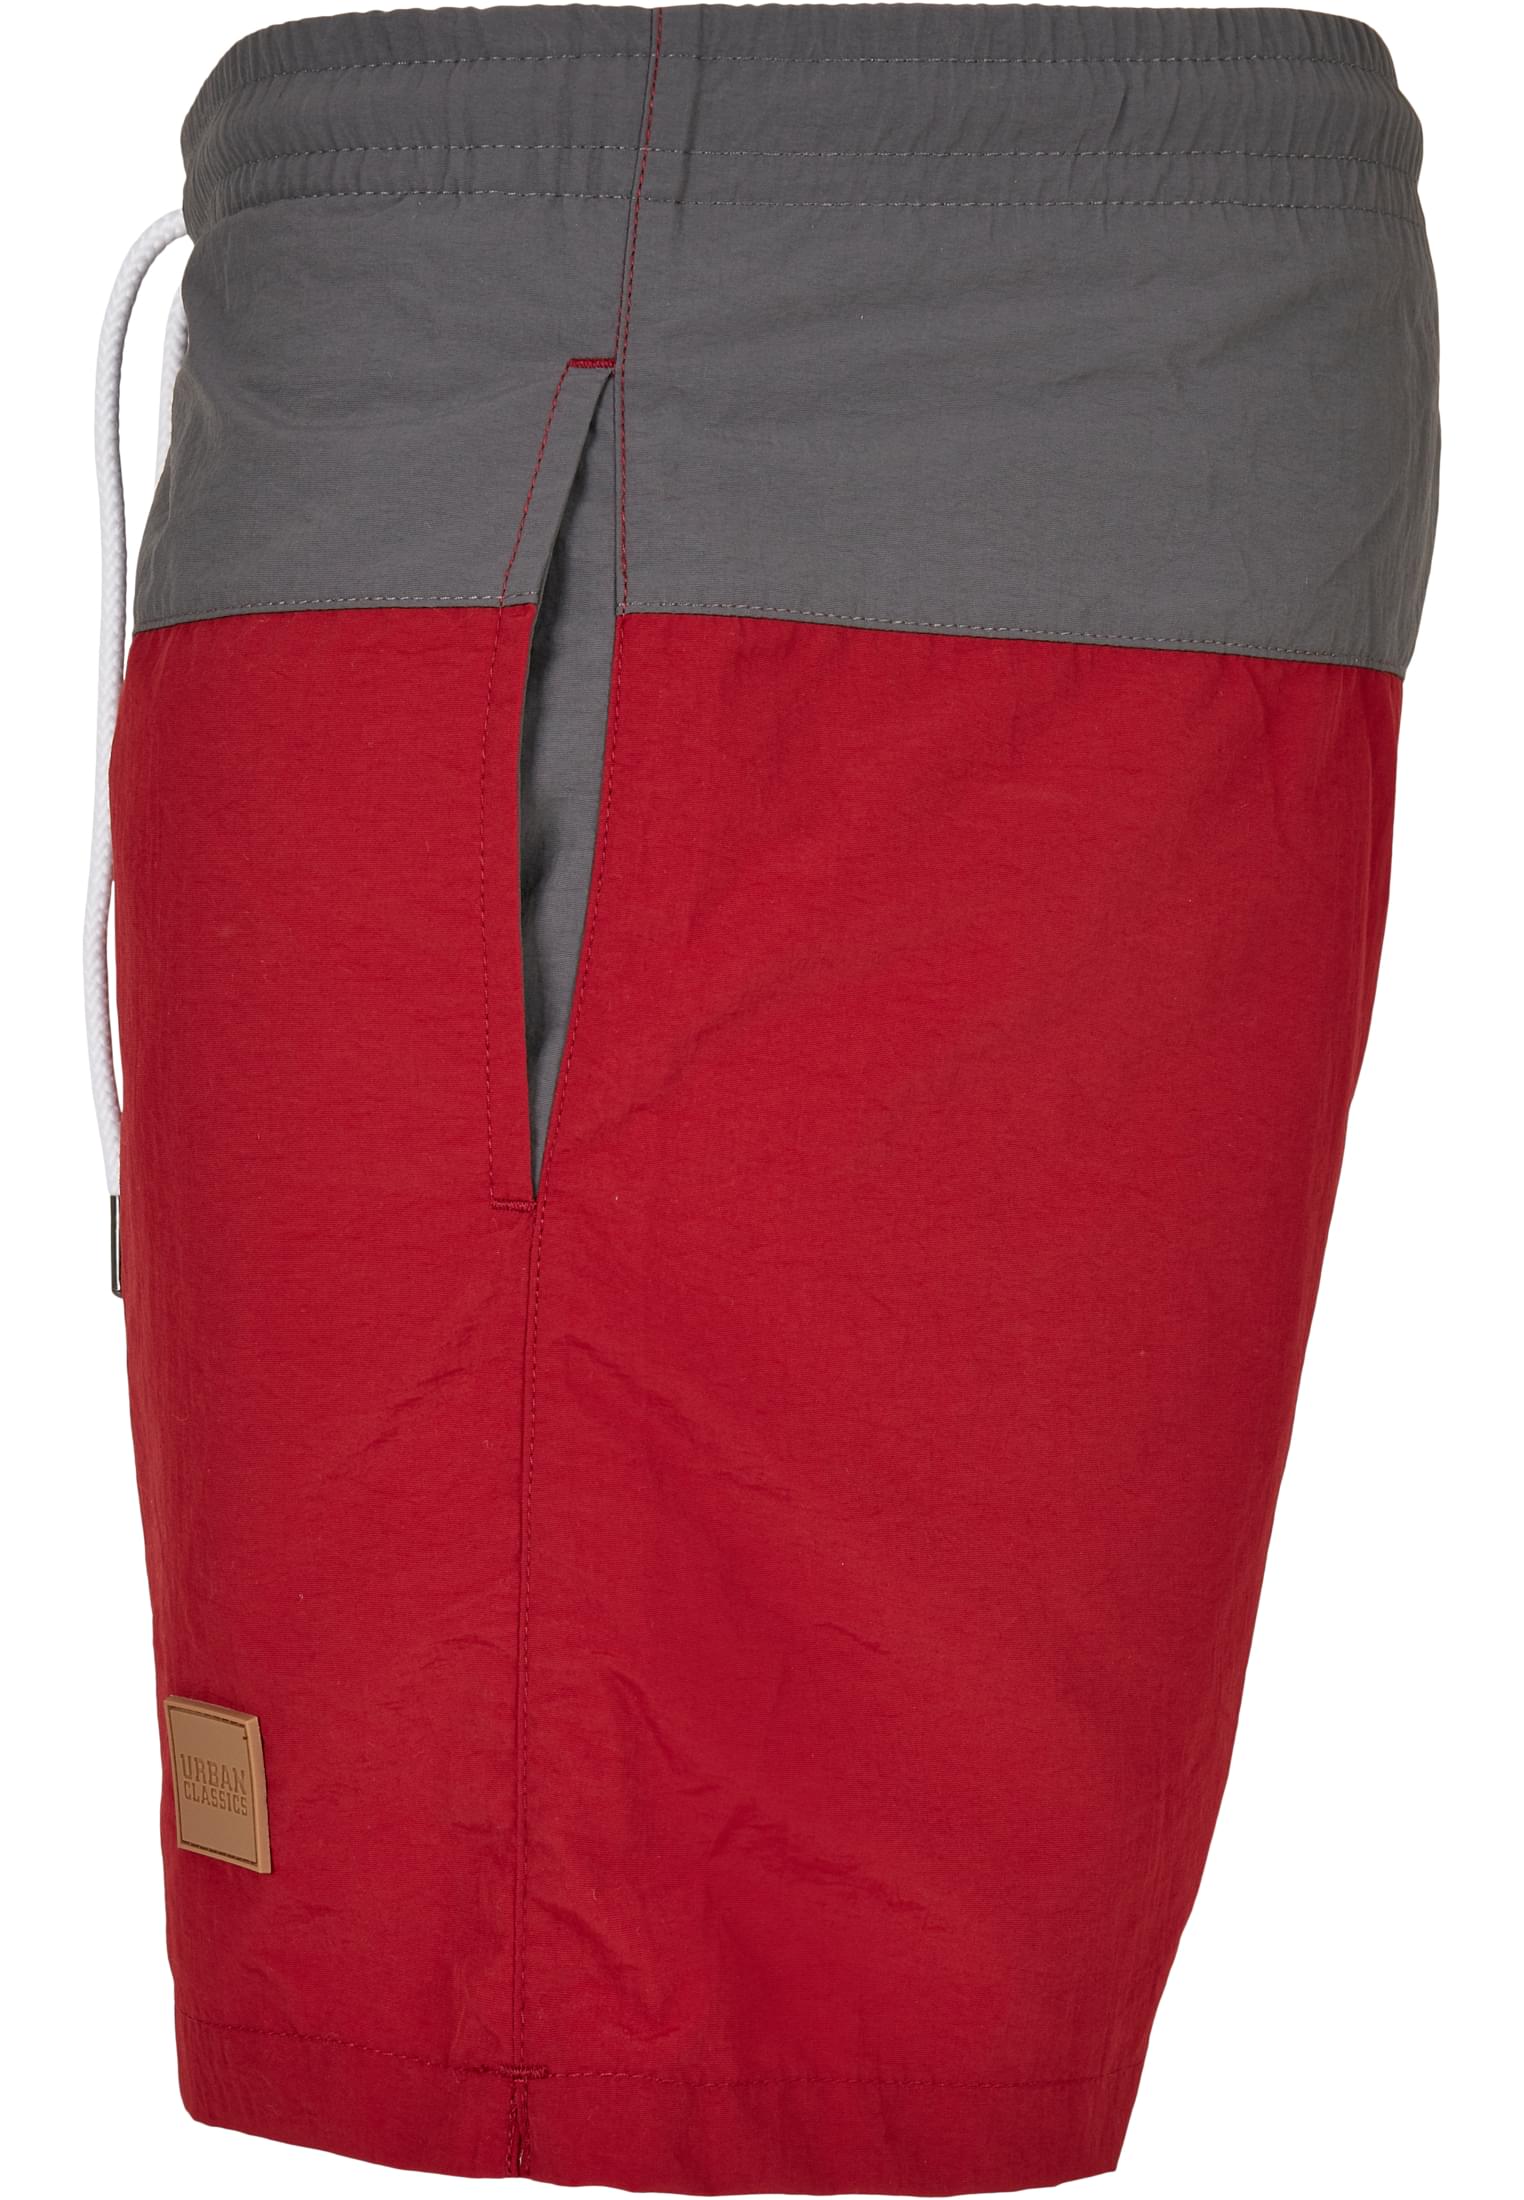 Plus Size Block Swim Shorts in Farbe brickred/darkshadow